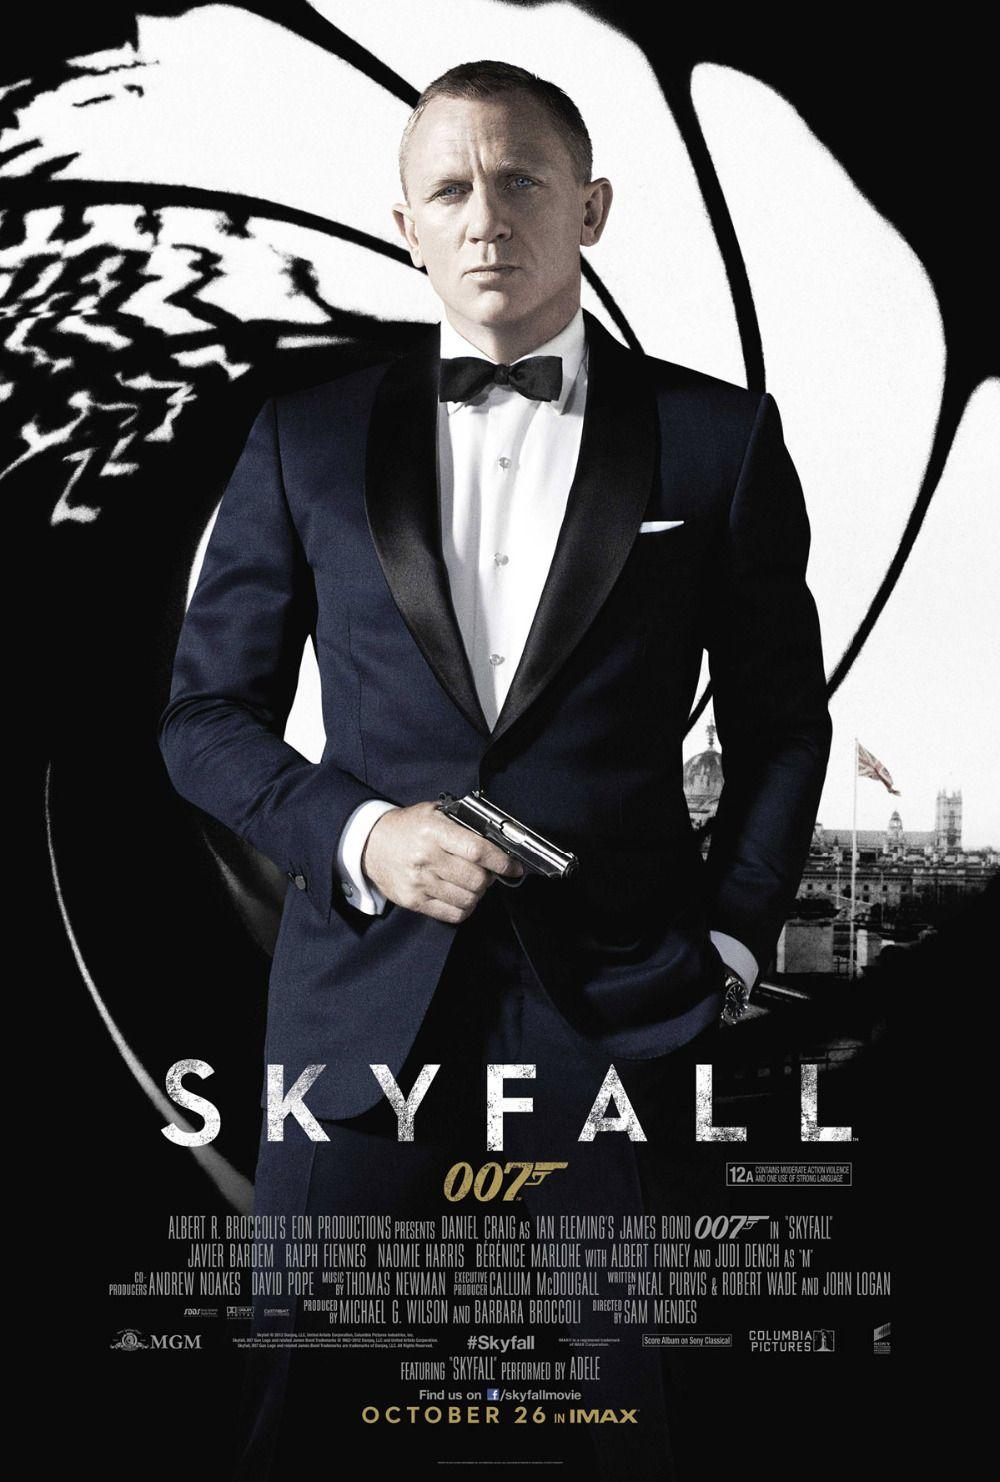 P1691 Skyfall James Bond 007 movie Wallpaper Poster Wall Art